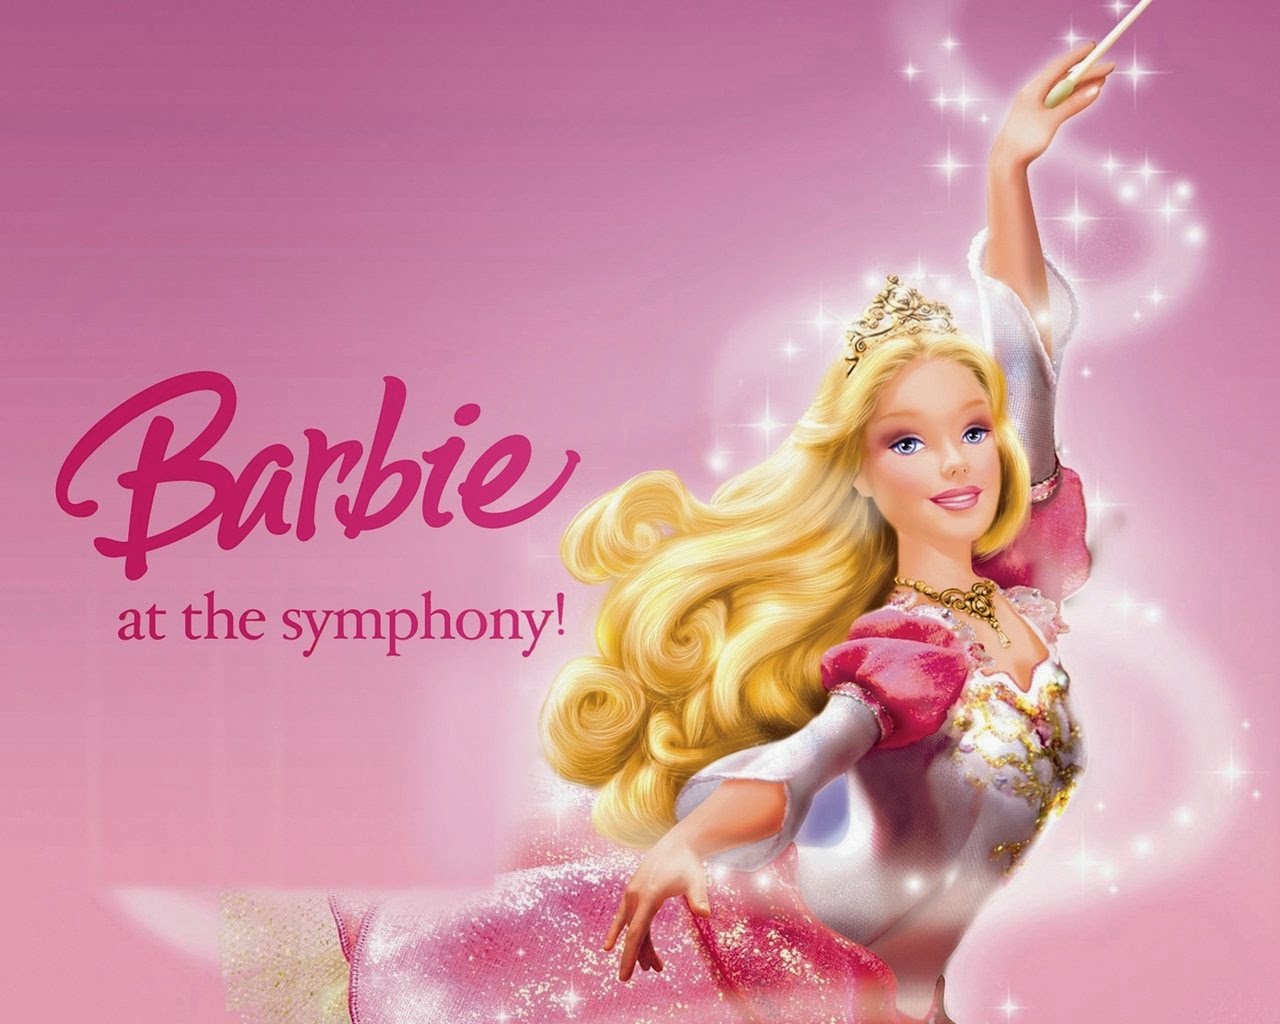 Barbie Dancing HD Wallpaper In The